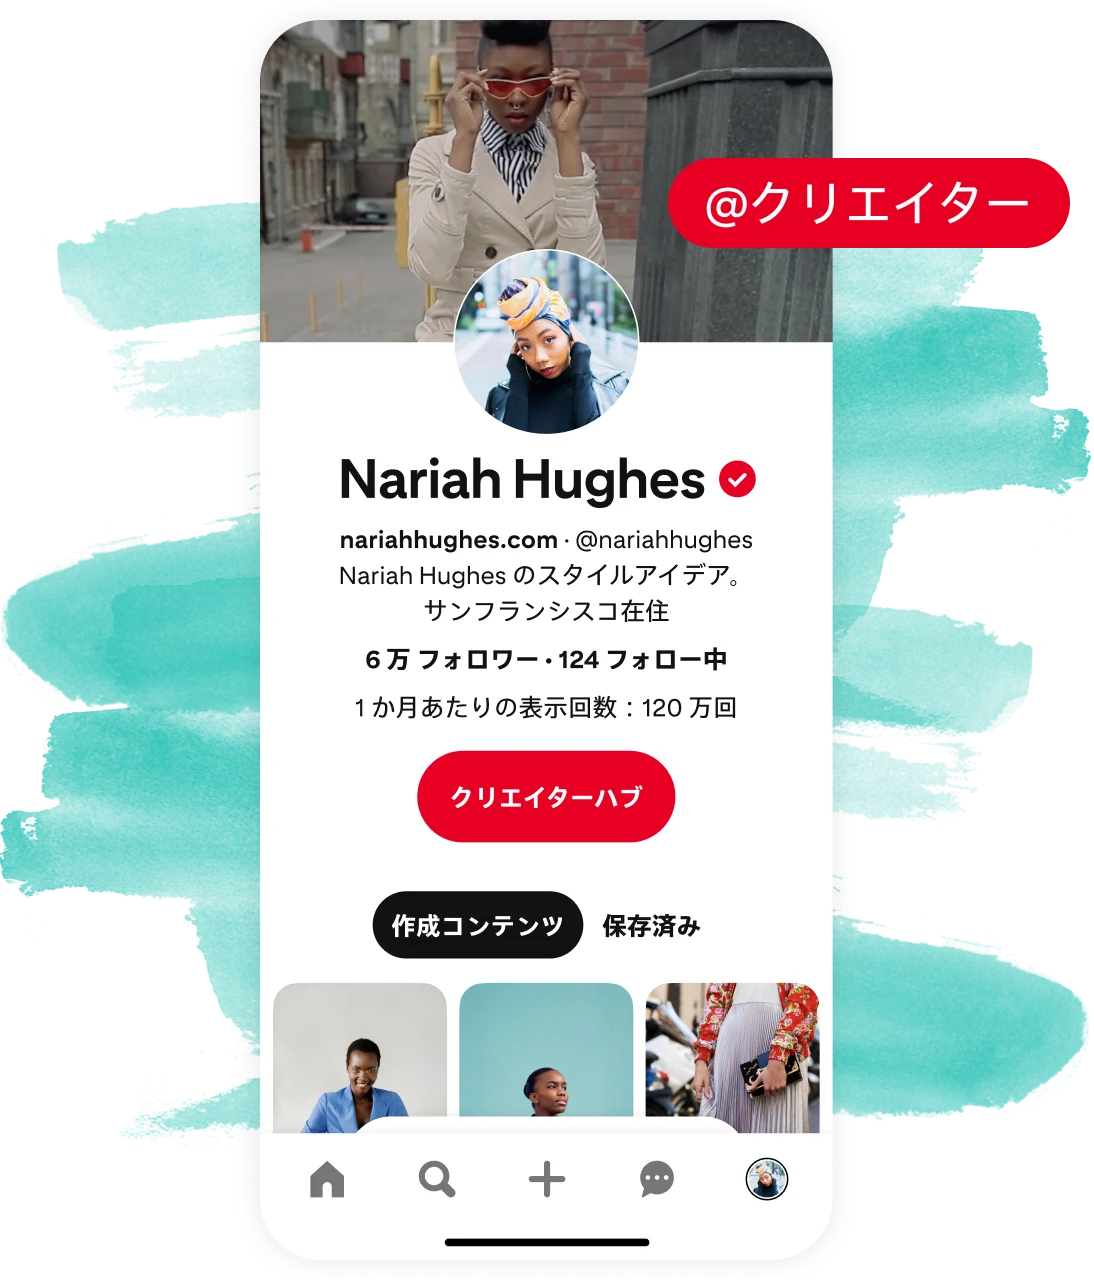 Nariah Hughes のクリエイターハブ Pinterest プロフィール